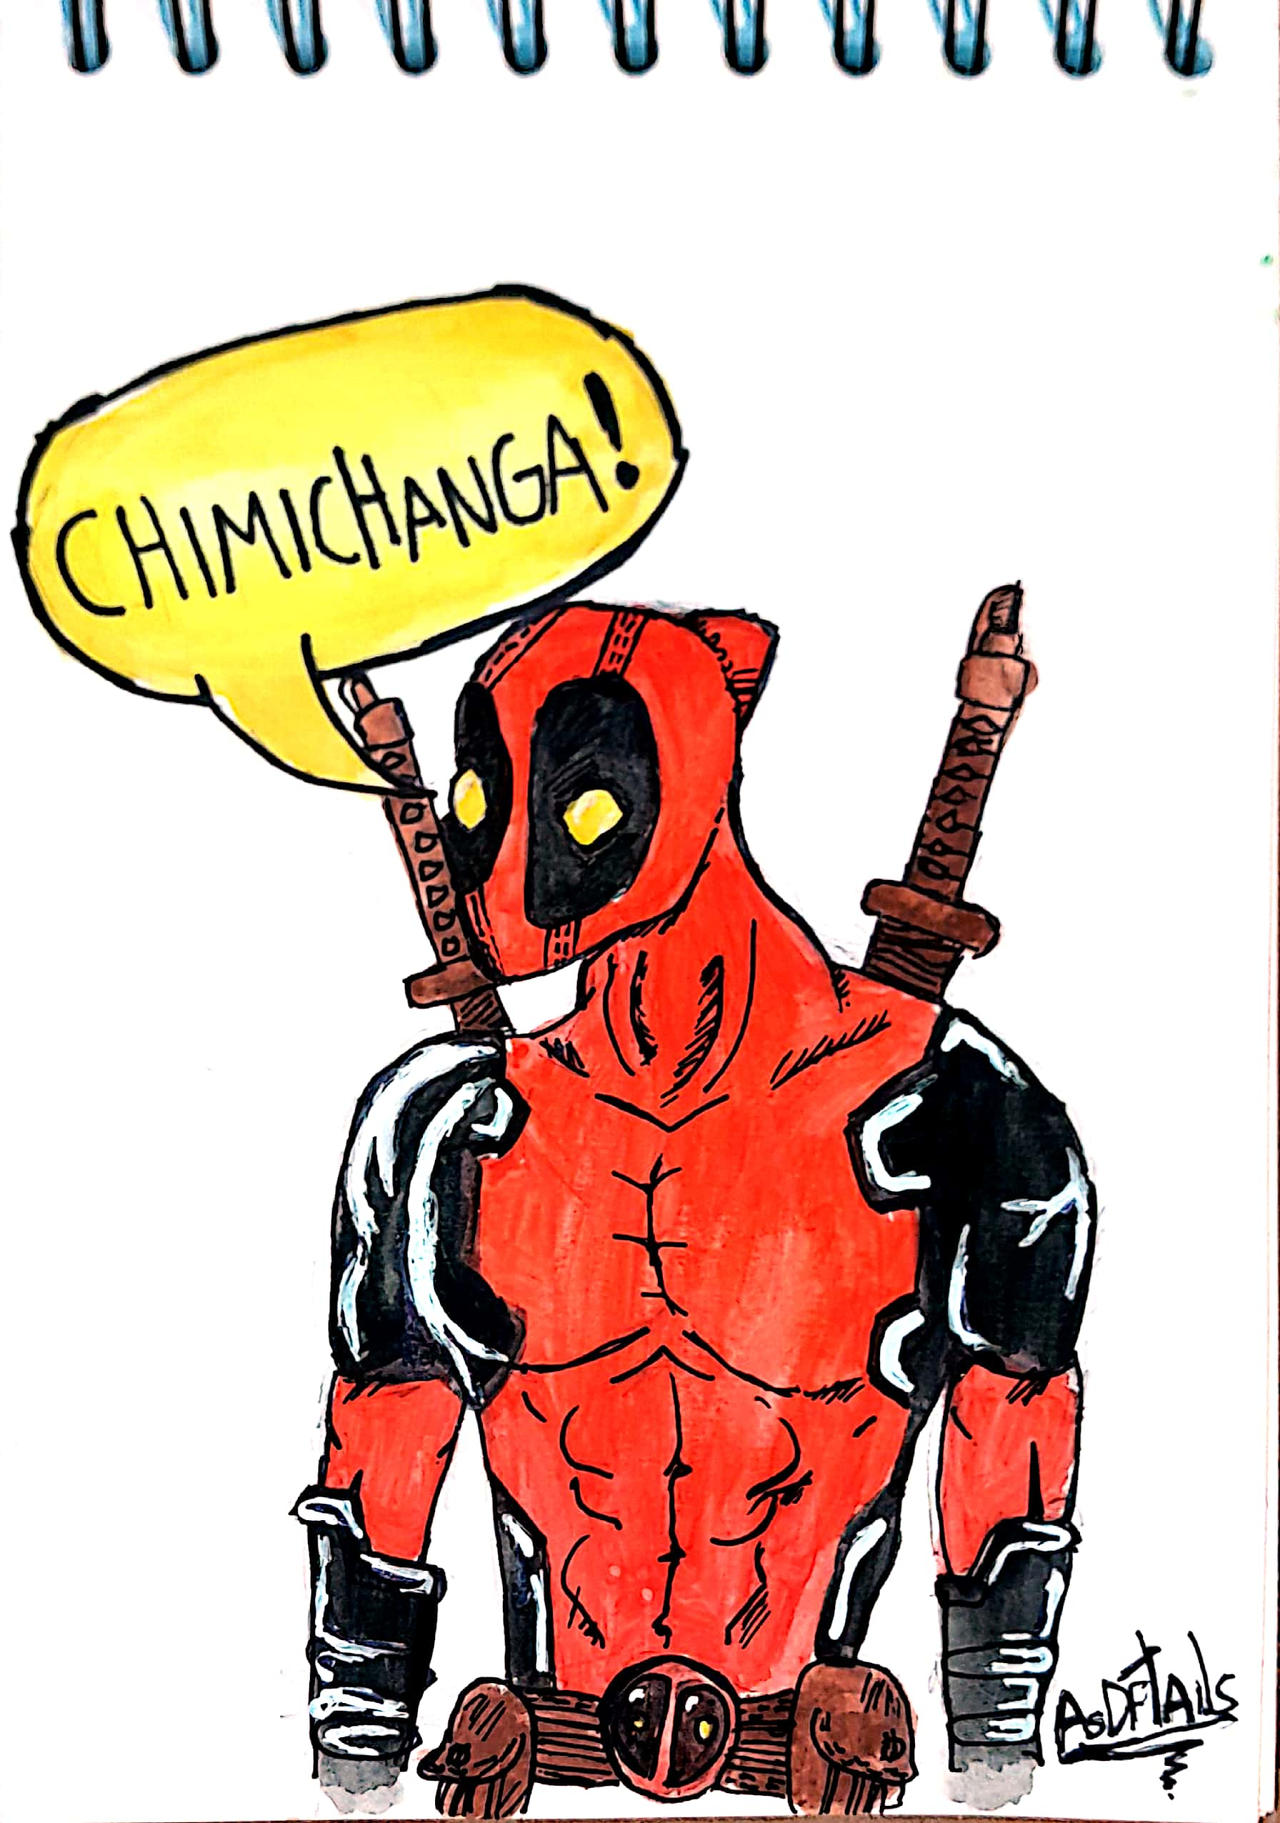 Deadpool the Chimichanga Man by JinxCrest101 on DeviantArt